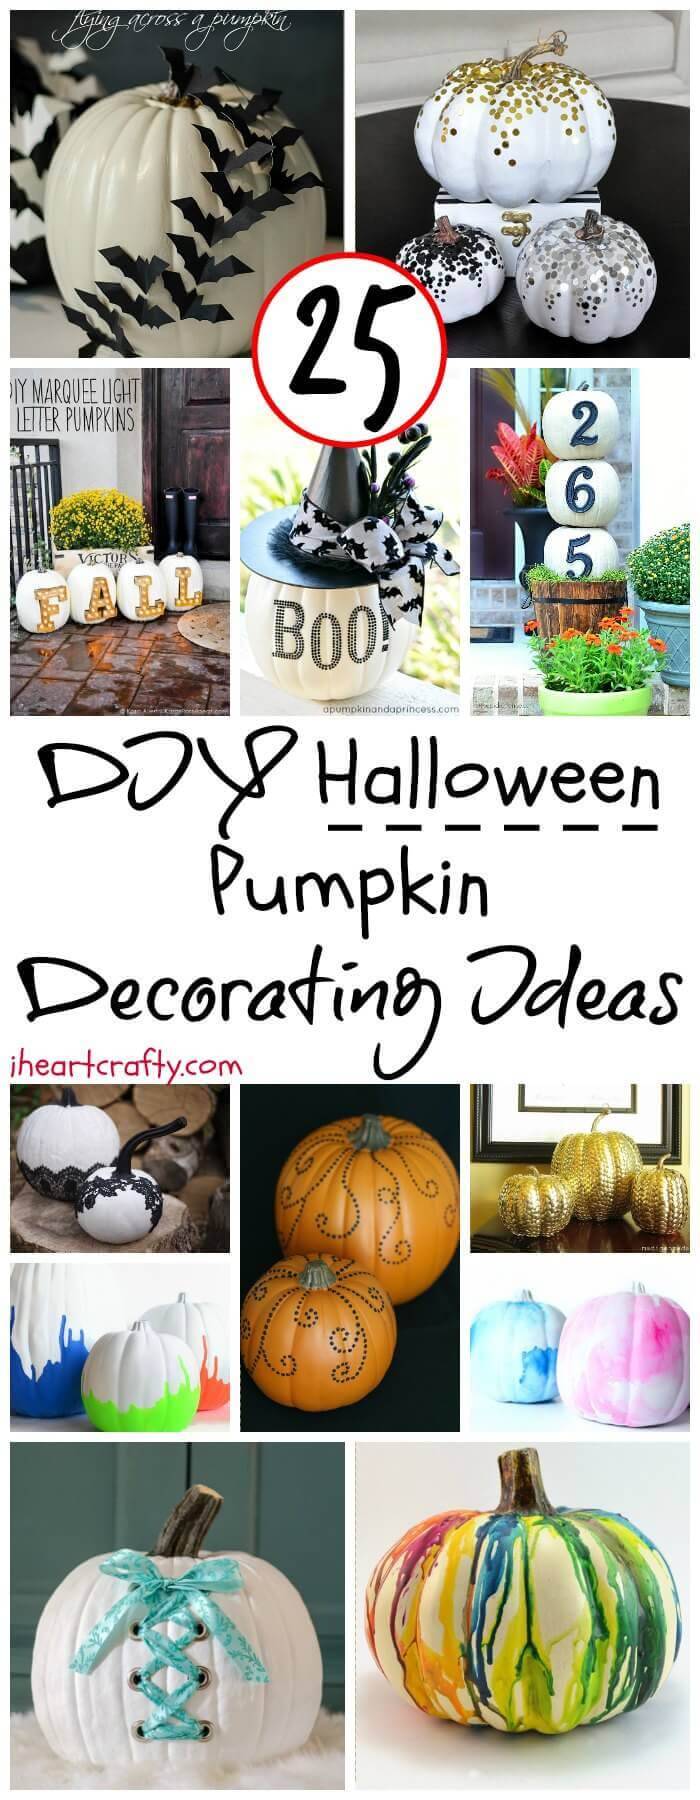 DIY Halloween Pumpkin Decorating Ideas - DIY Fall Decor - DIY Halloween Projects